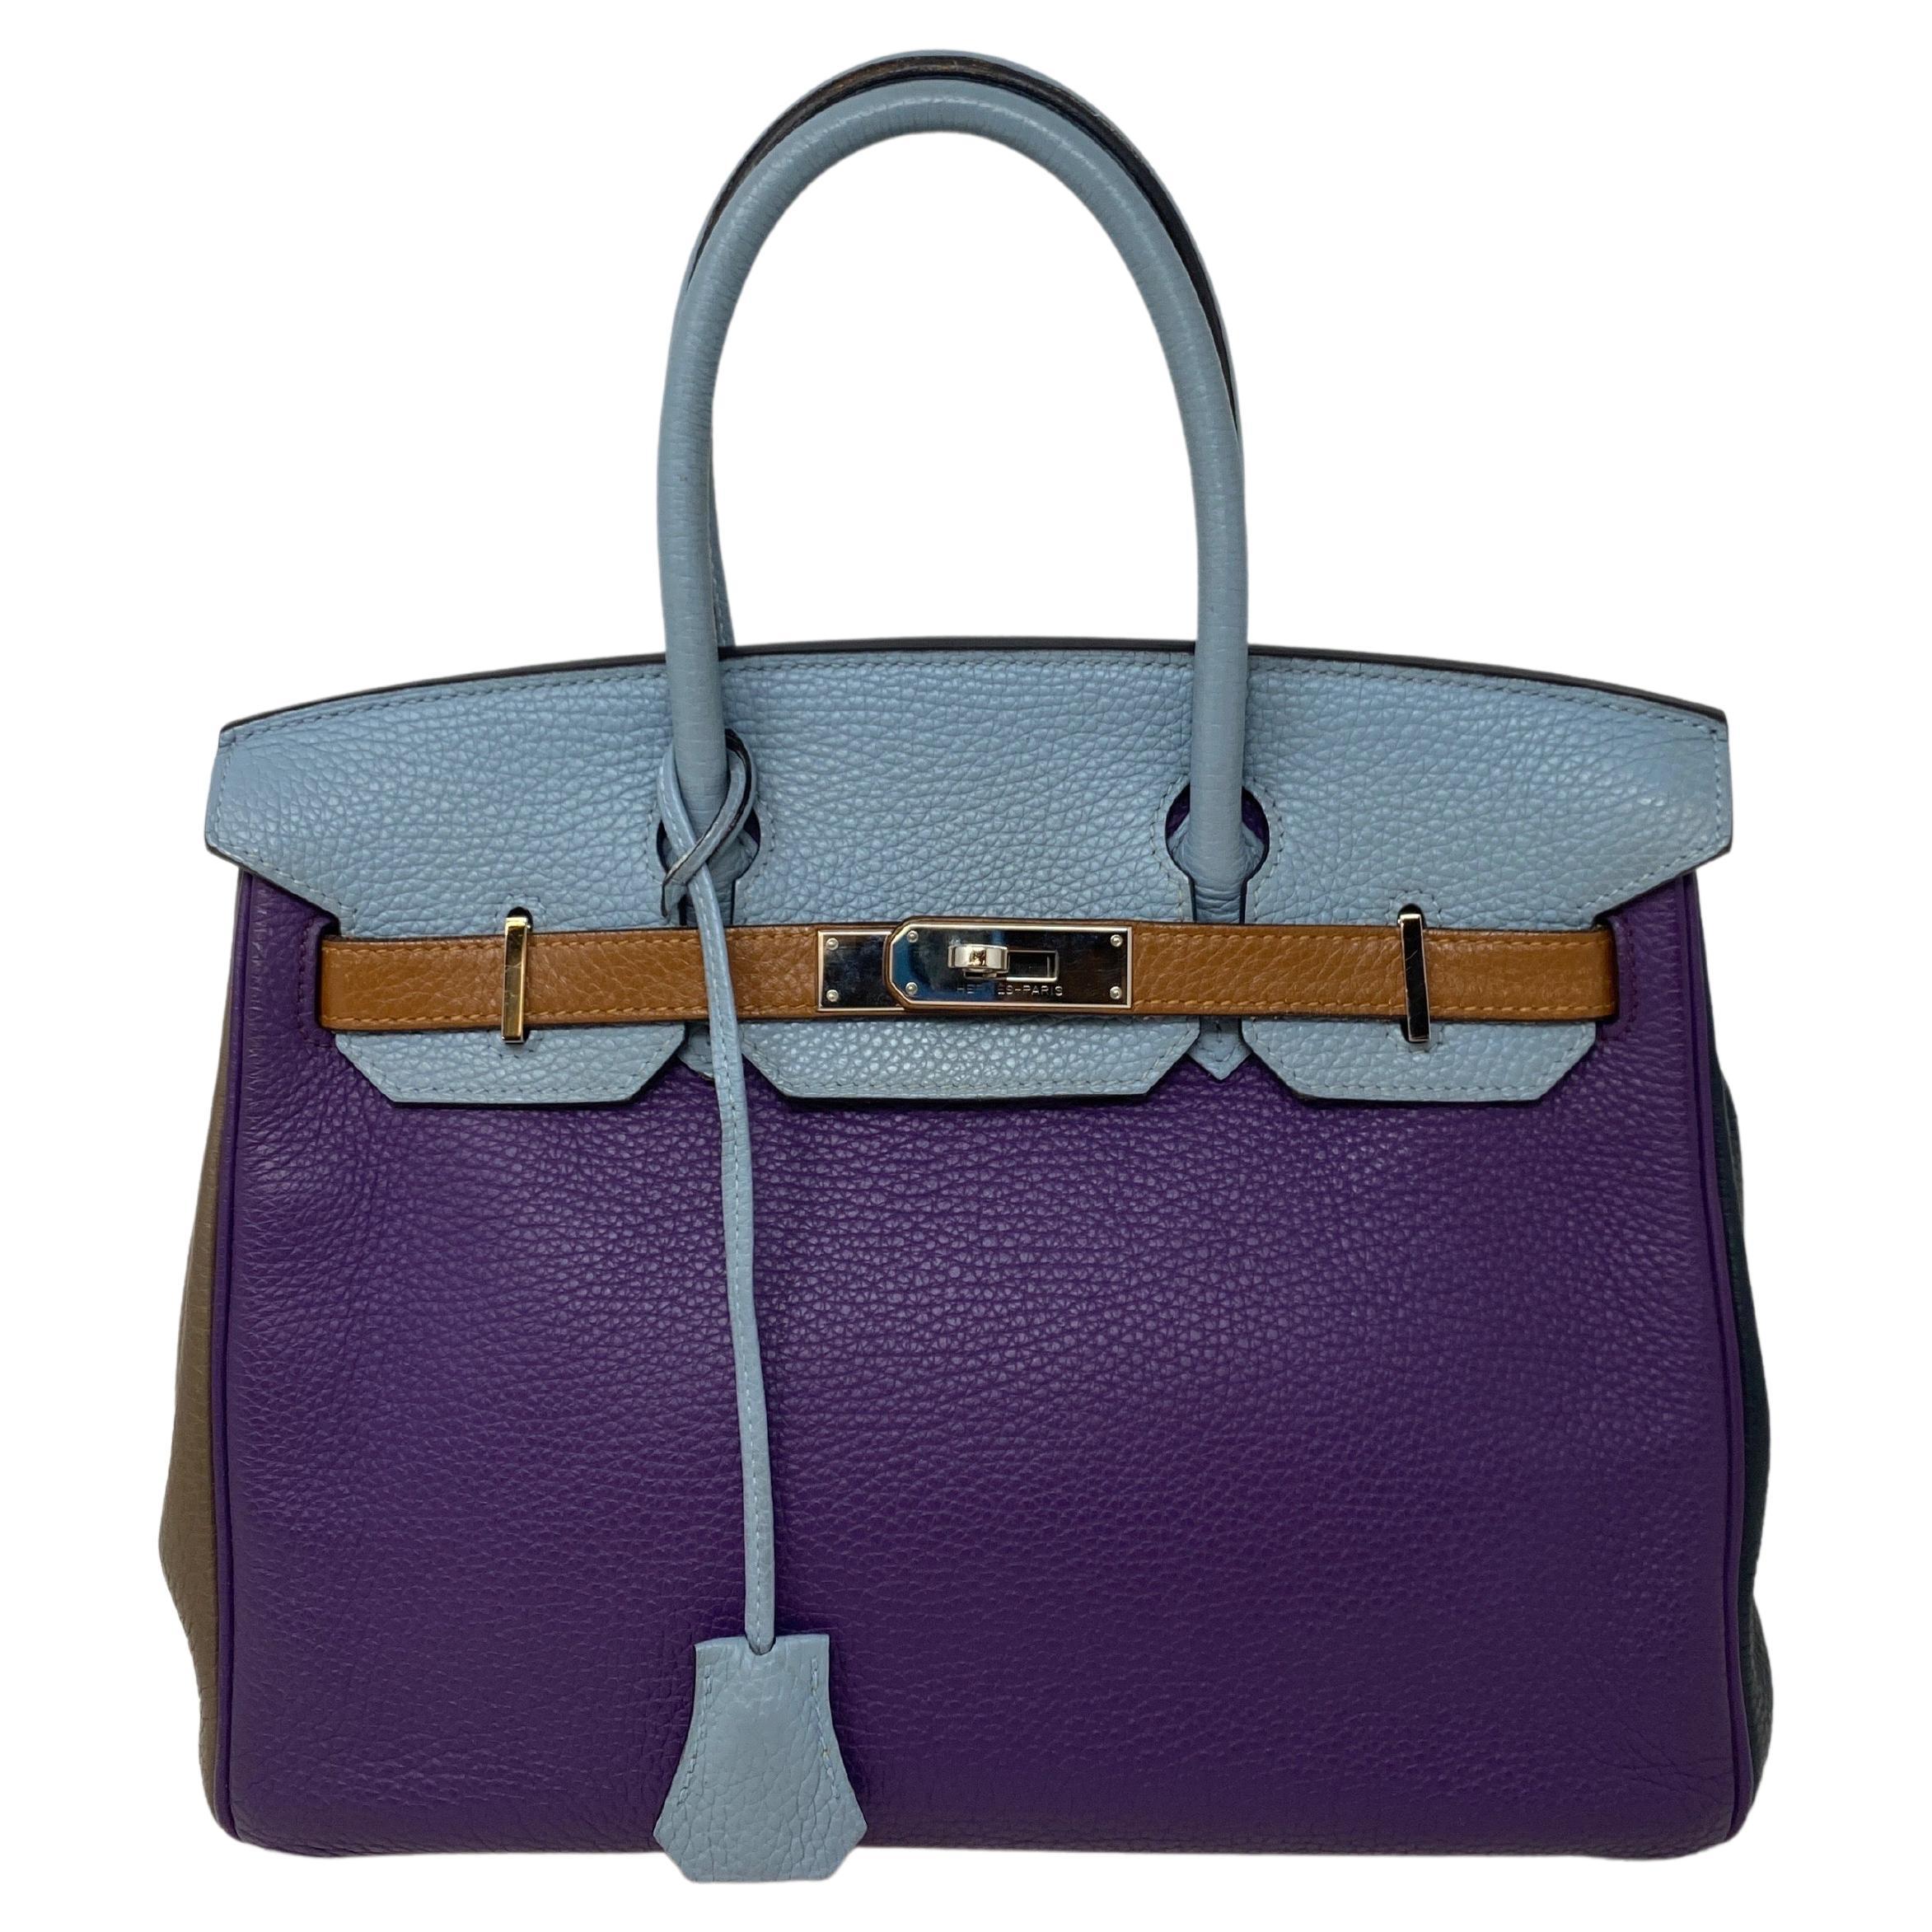 Hermes Birkin 30 Multi-color Bag